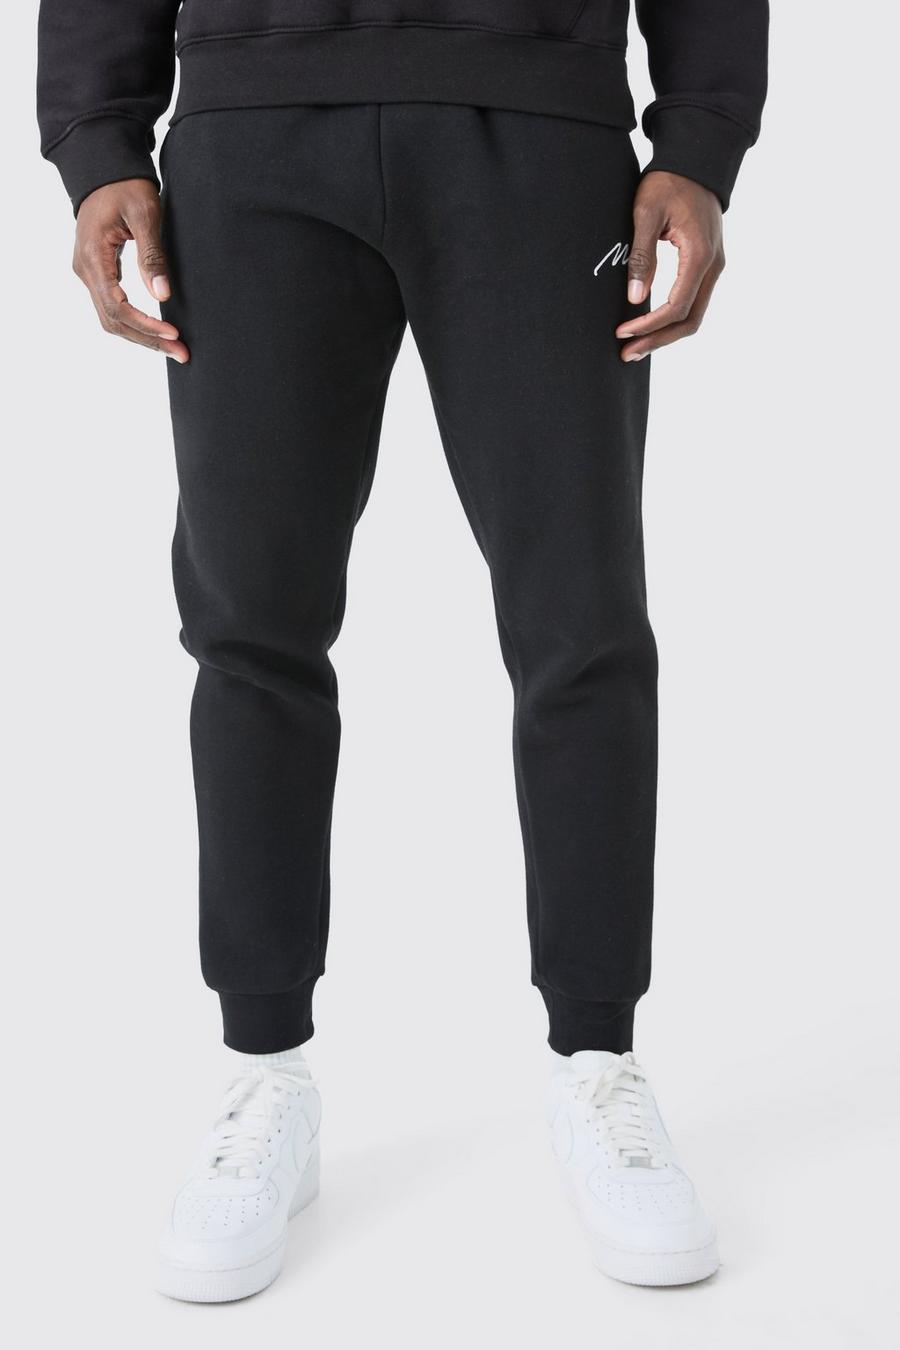 Pantalón deportivo ajustado con firma MAN, Black image number 1